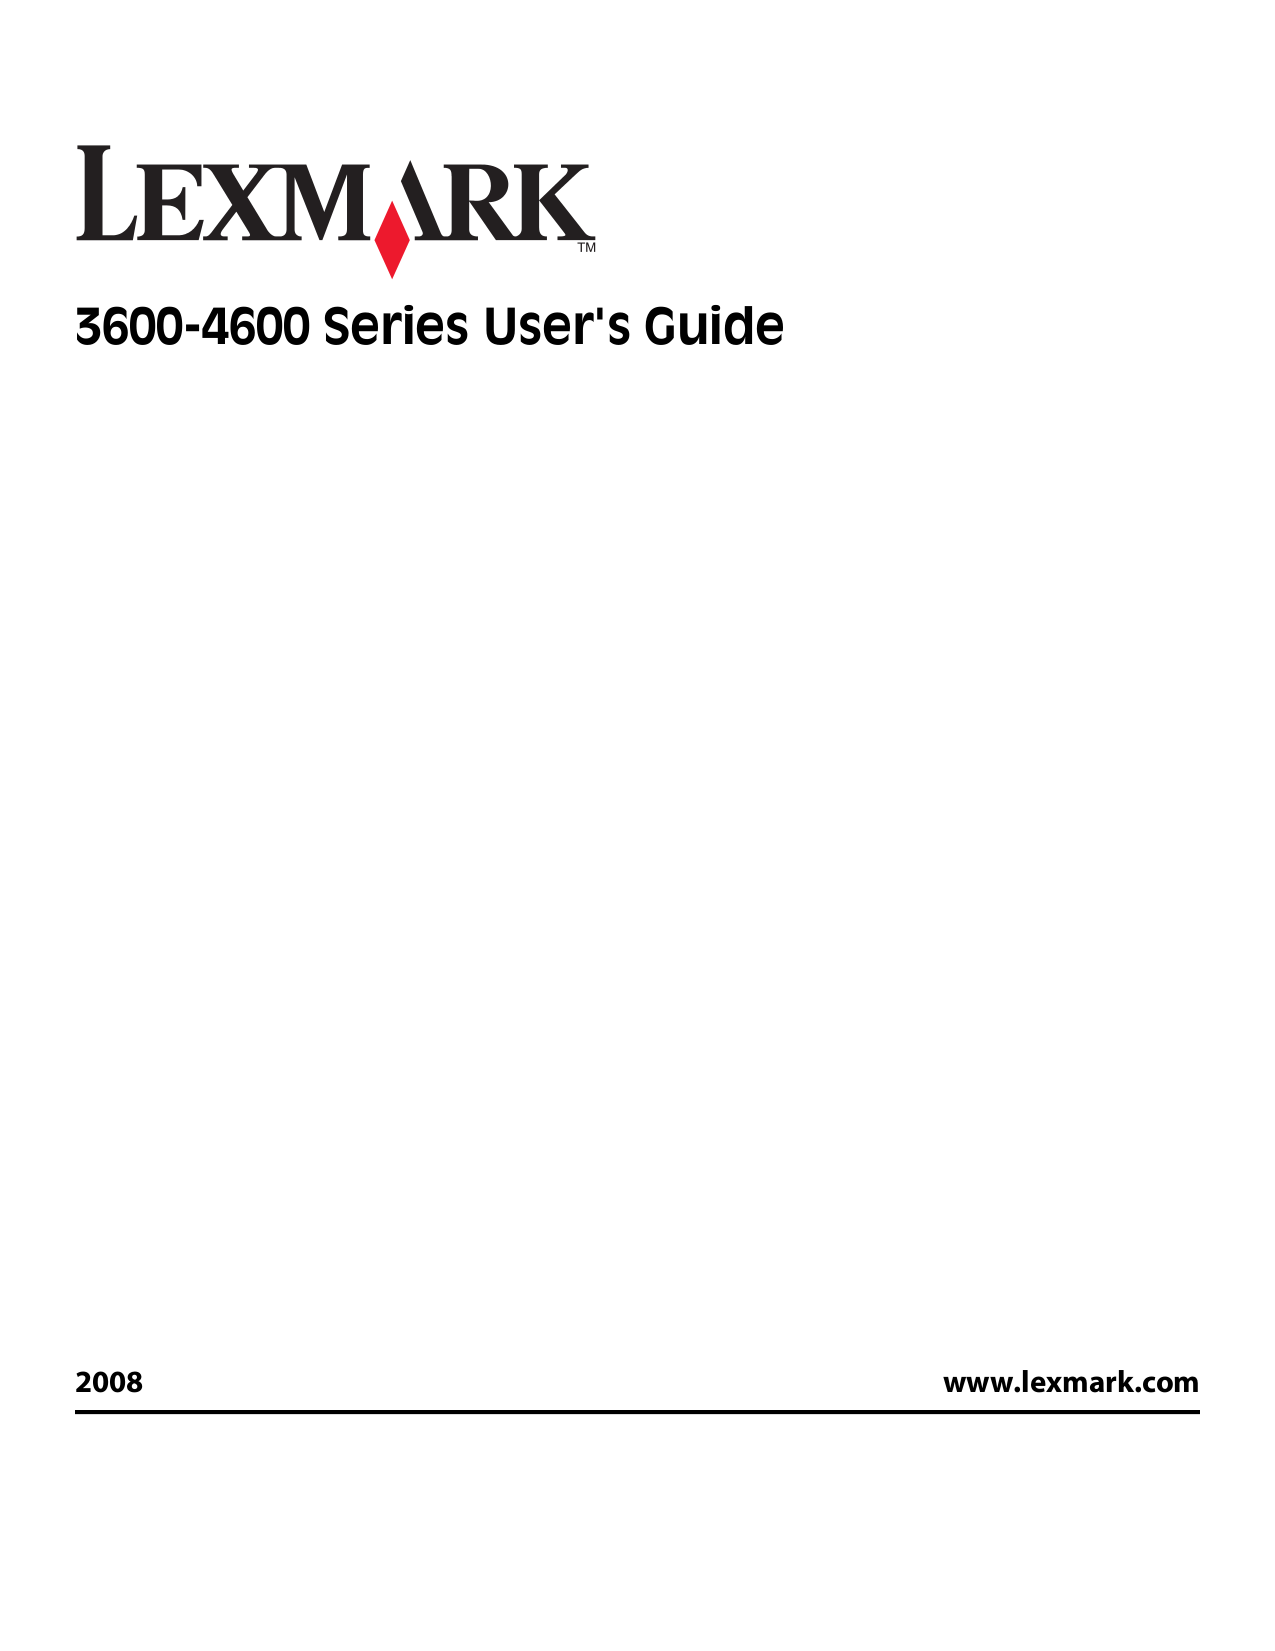 lexmark x4650 software download free